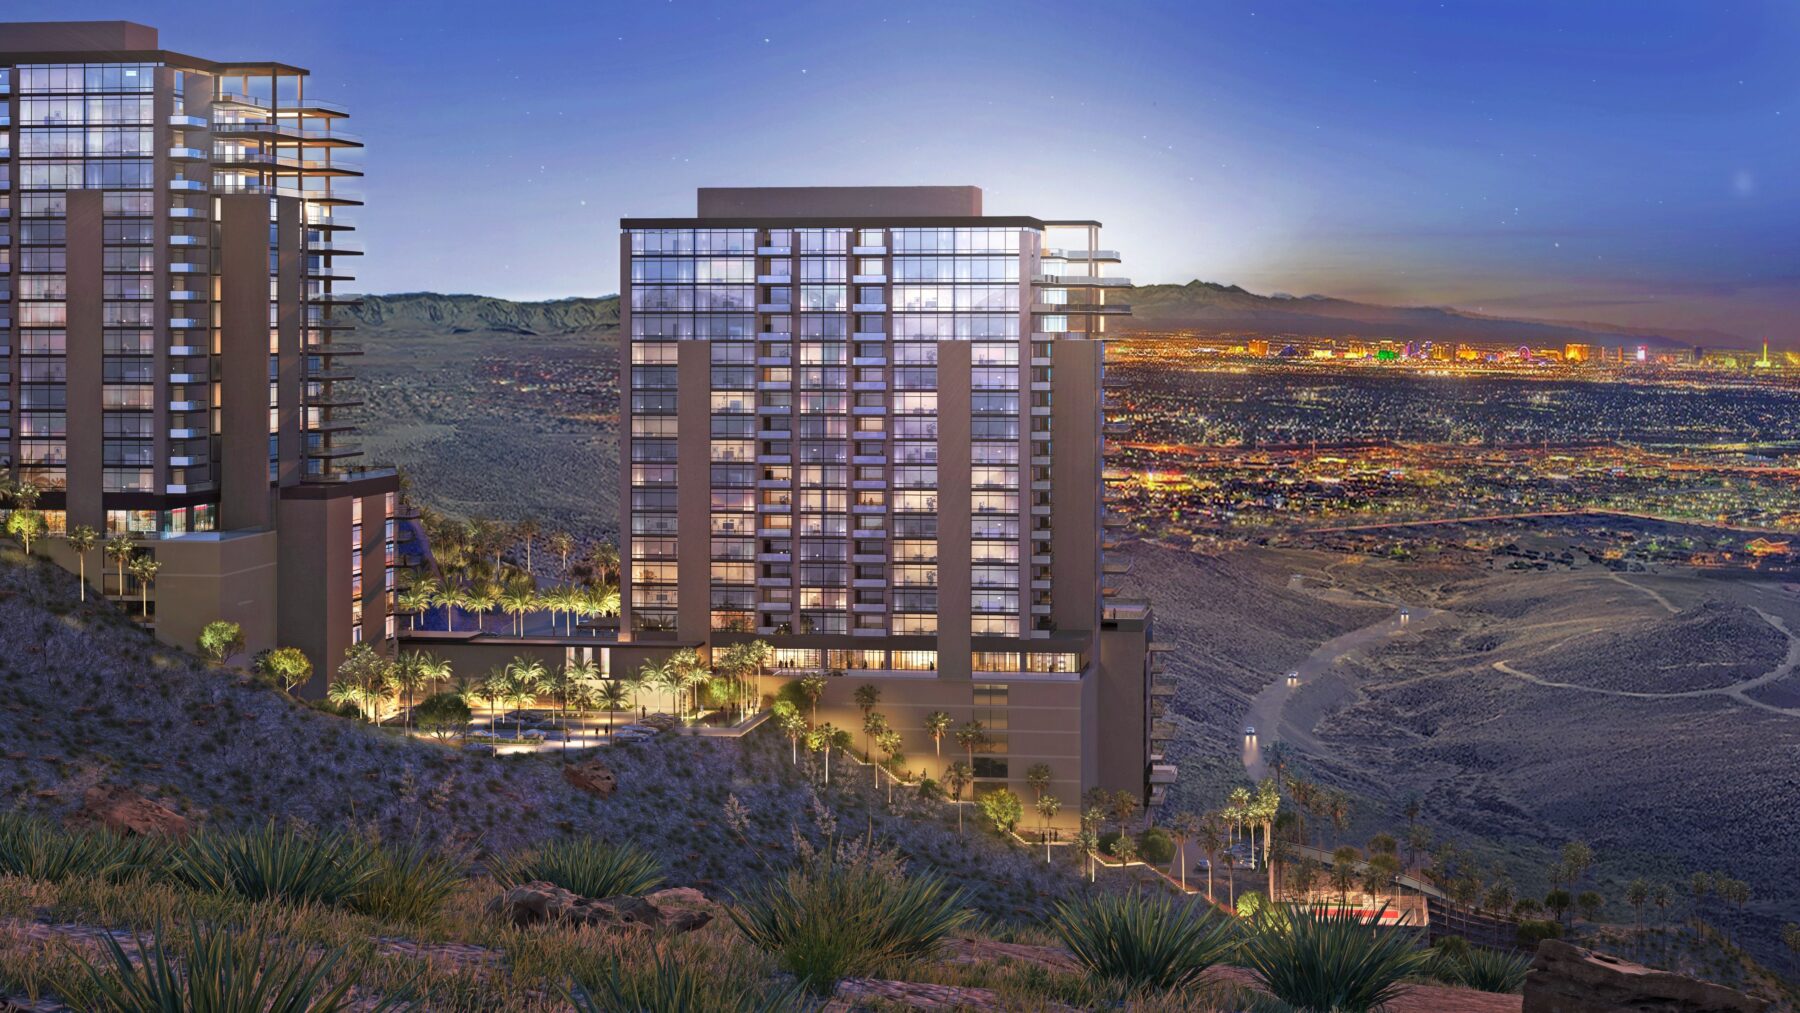 Introducing Pinnacle Residences at MacDonald Highlands in Las Vegas